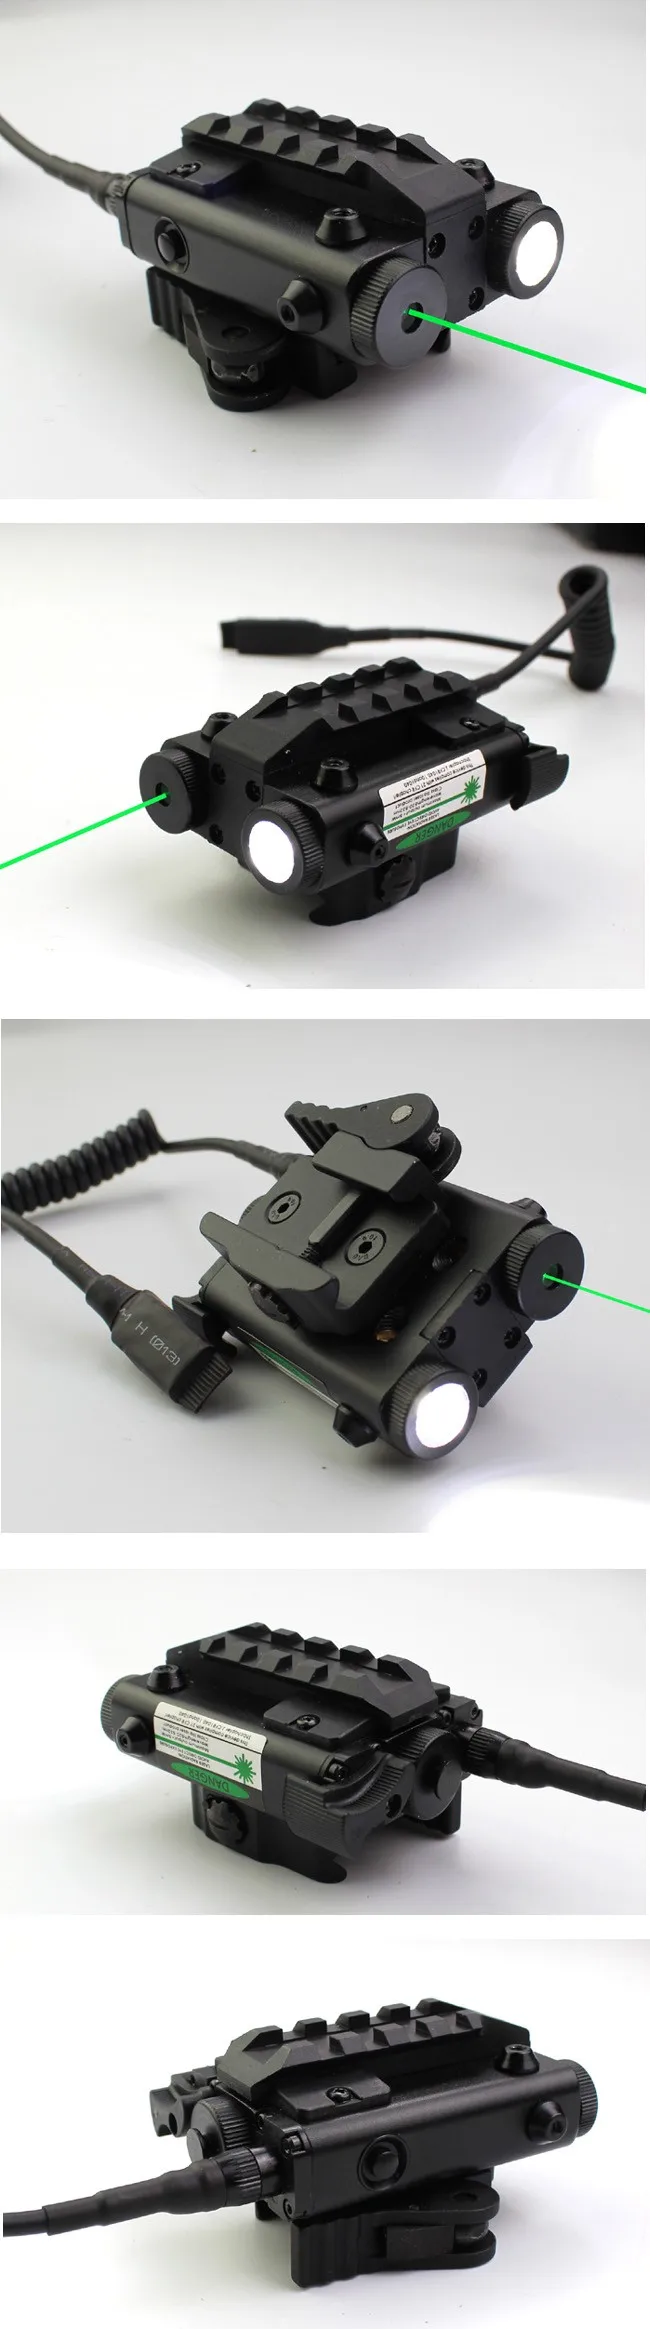 ES-LS-FX103G tactical led flashlight with green laser sight.jpg